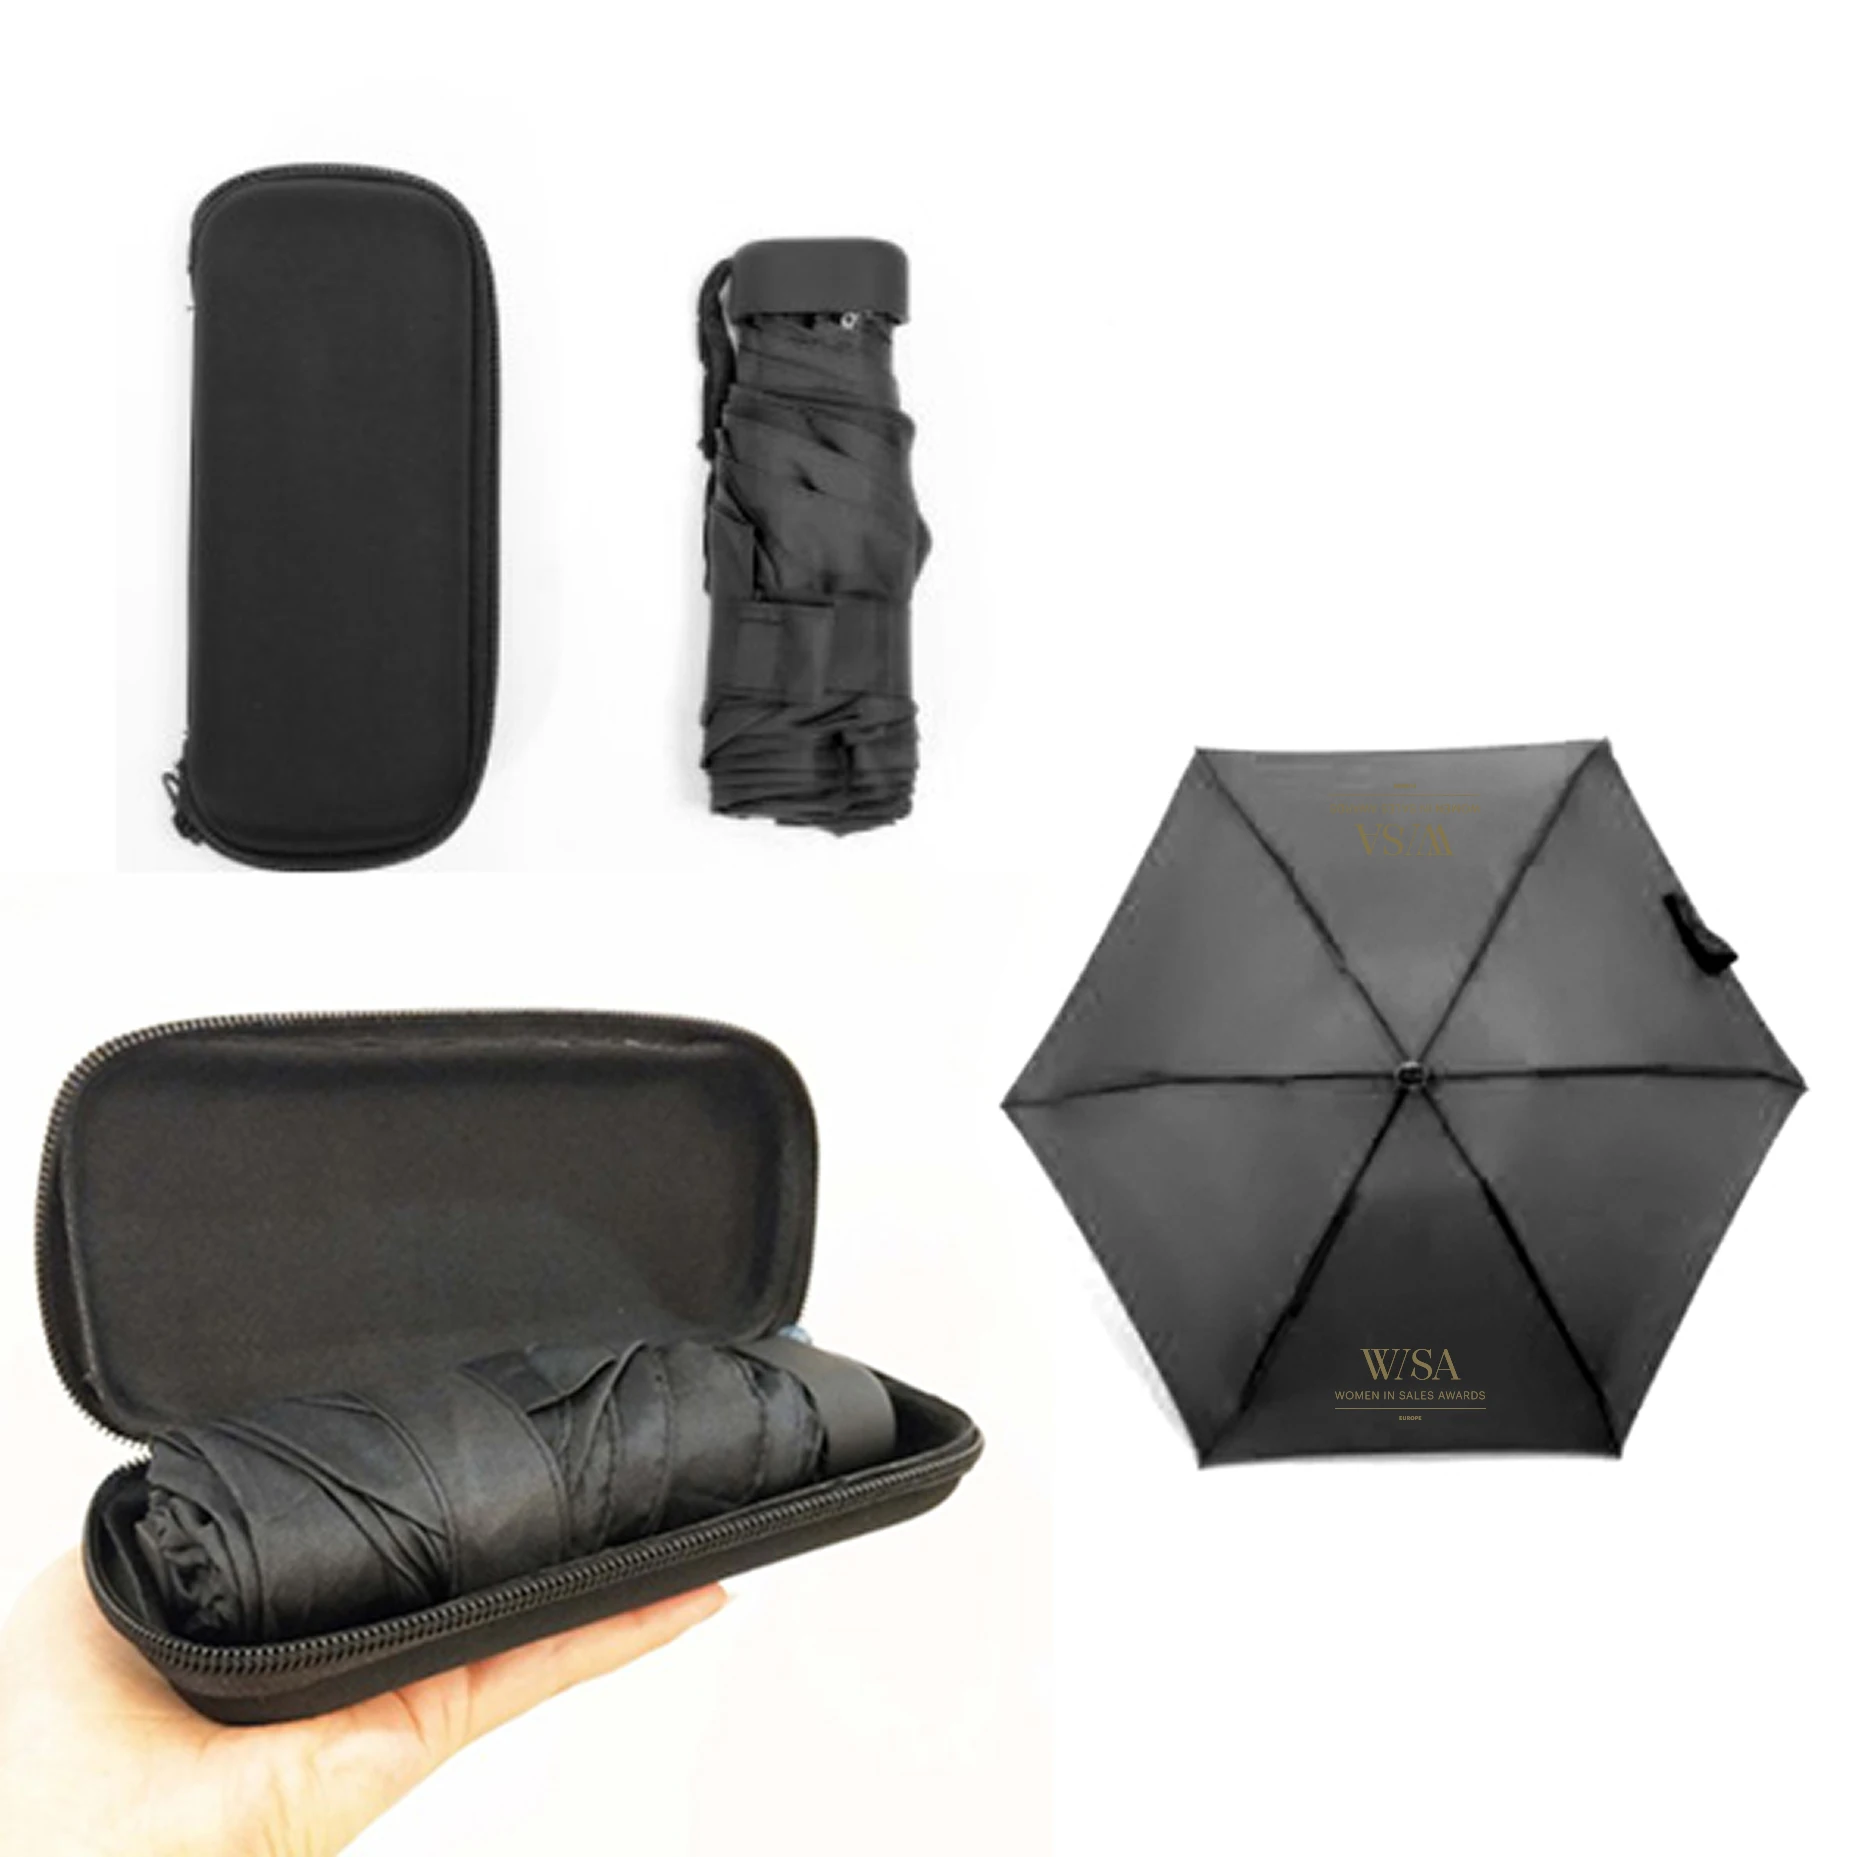 Cheap Pocket Mini FOLDING Portable Umbrella with EVA case